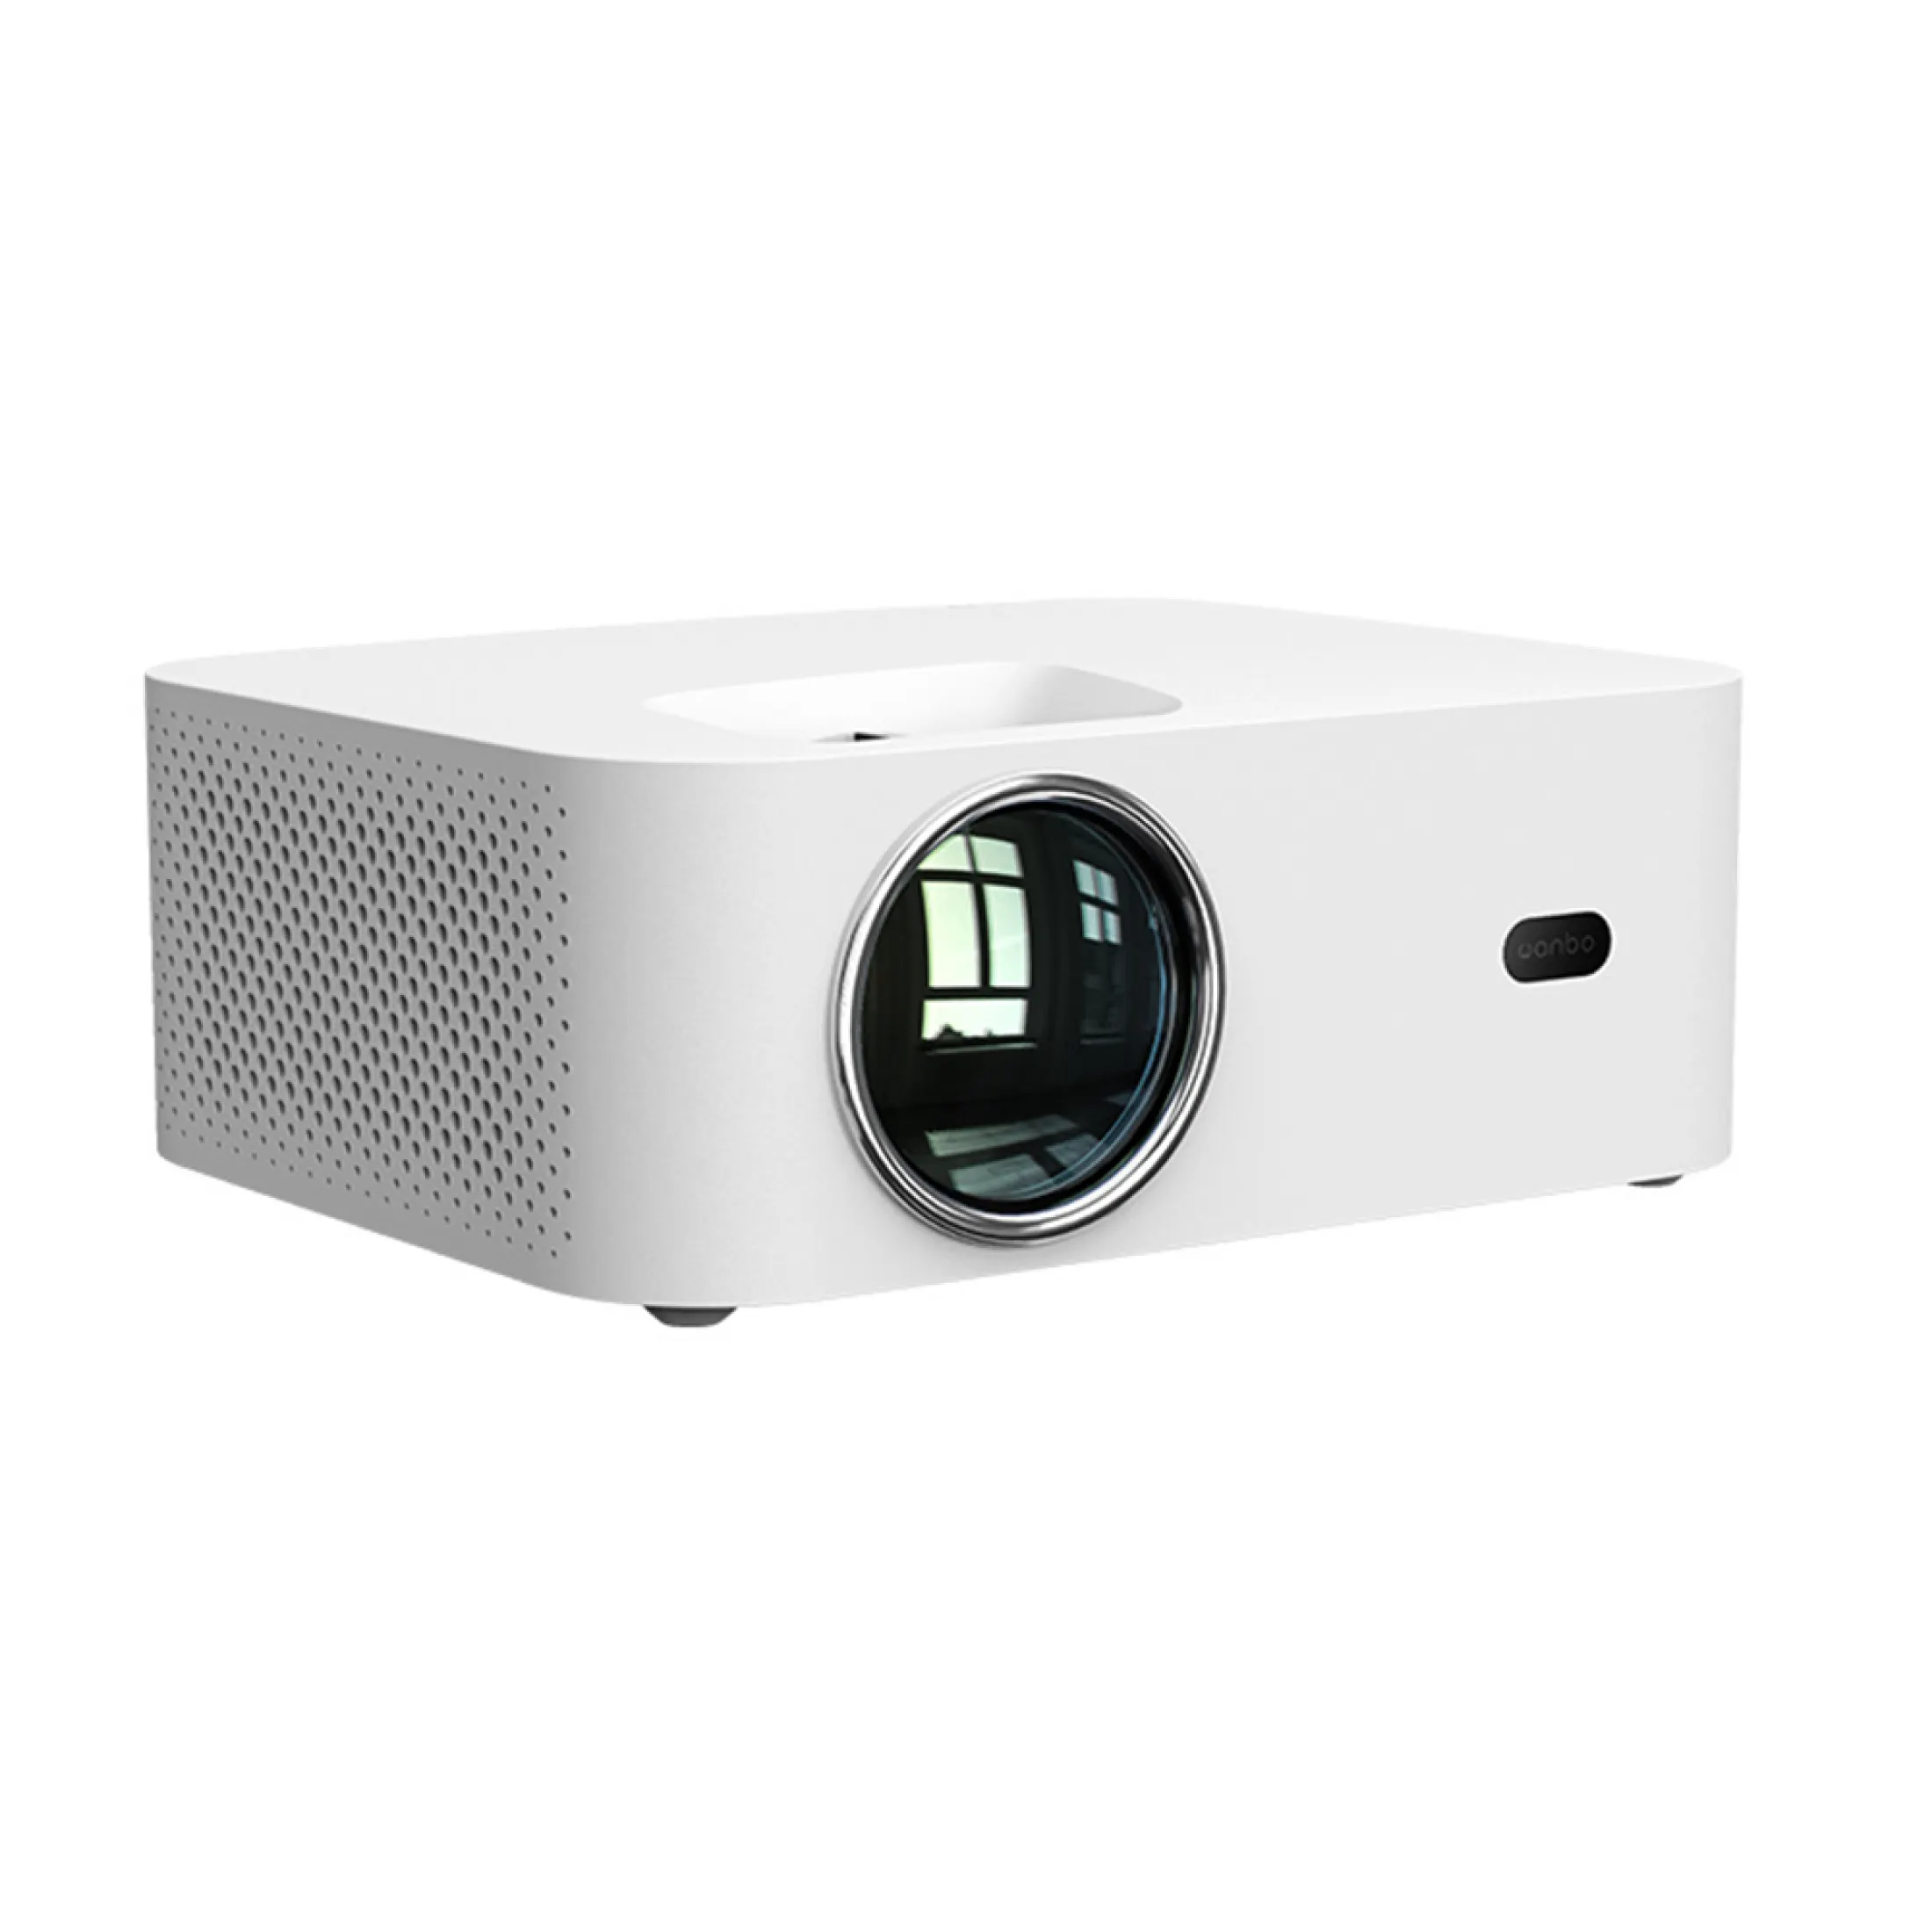 Wanbo Projector X1 [720P Resolution | Low Noise | Screen Mirroring |  Support Port AV | HDMI & USB | Built-in Speaker]